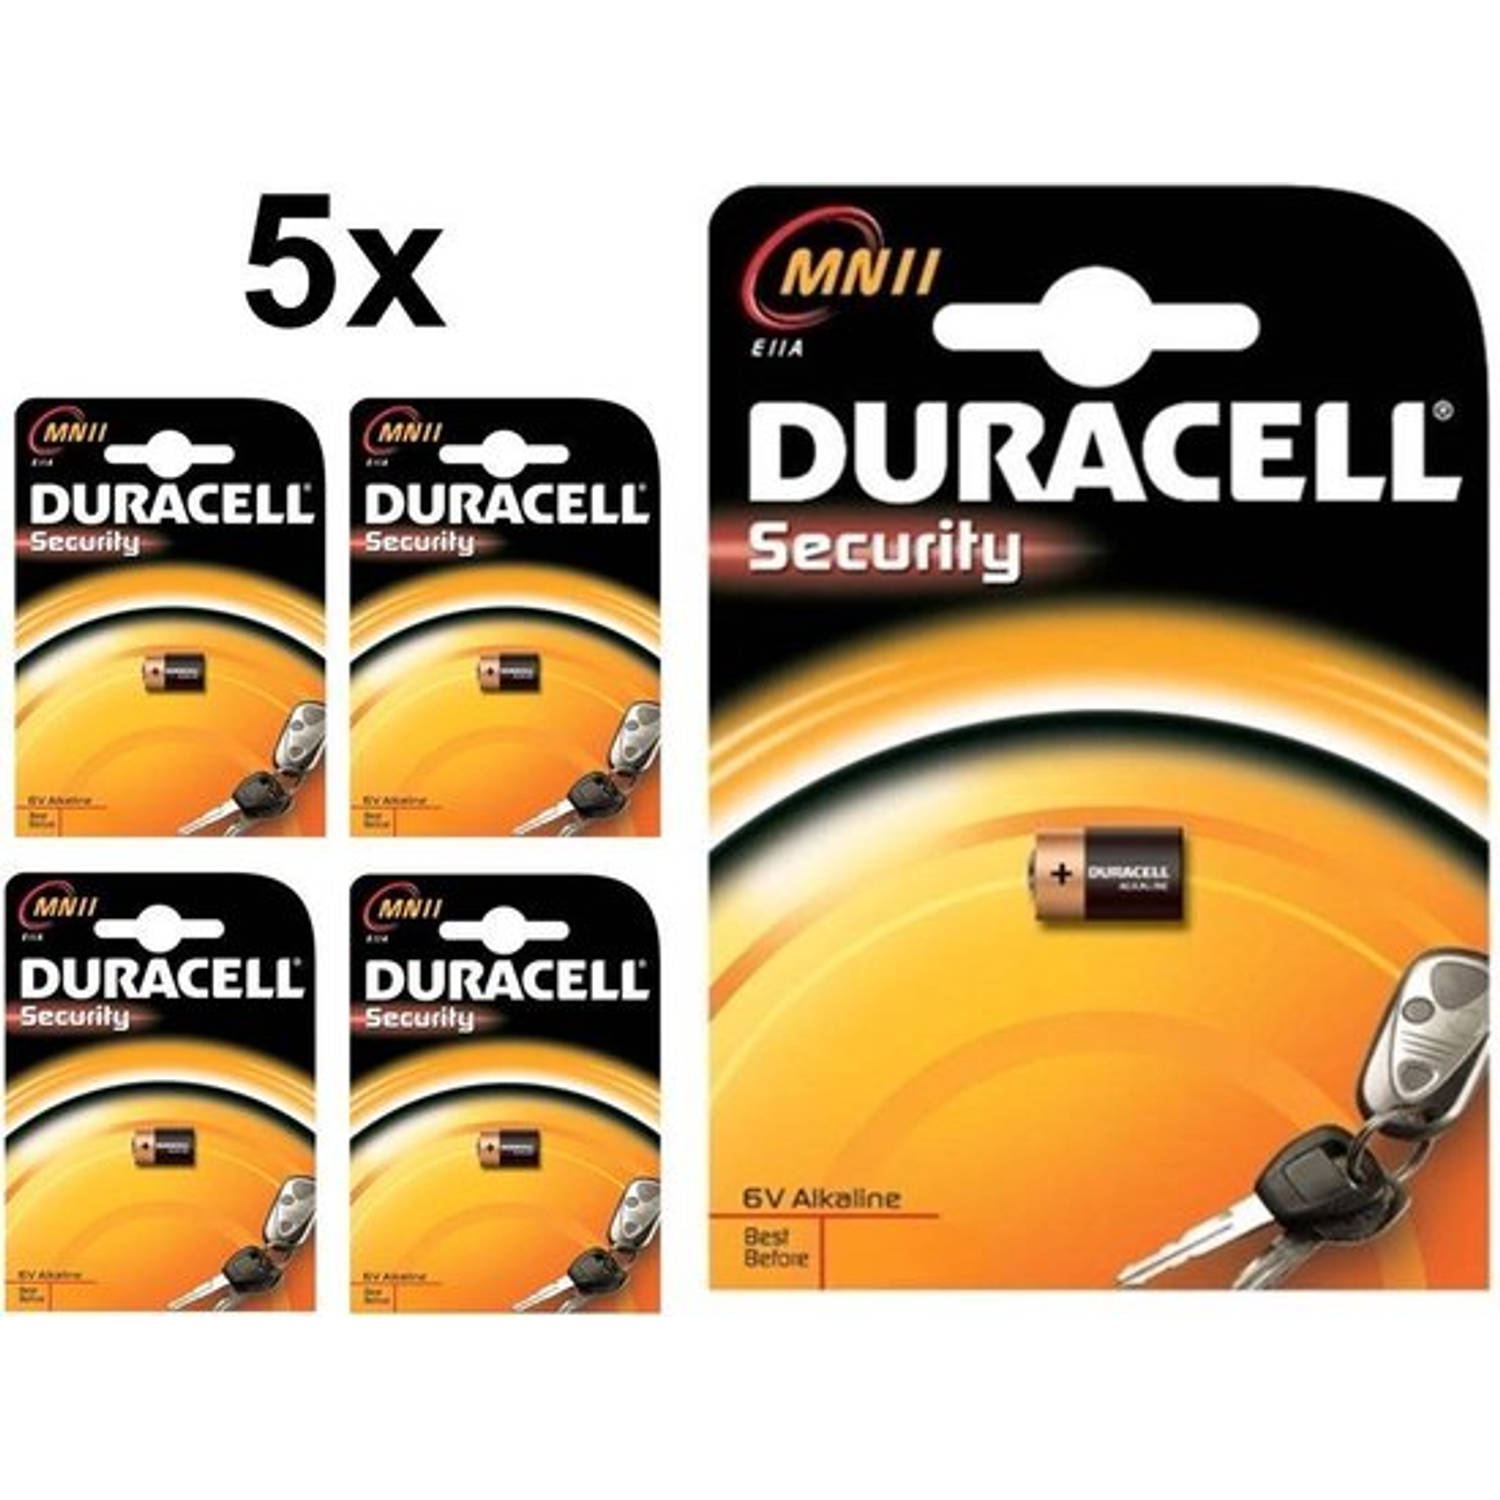 5 Stuks Duracell A11 Mn11 11a 6v Security Alkaline Batterij